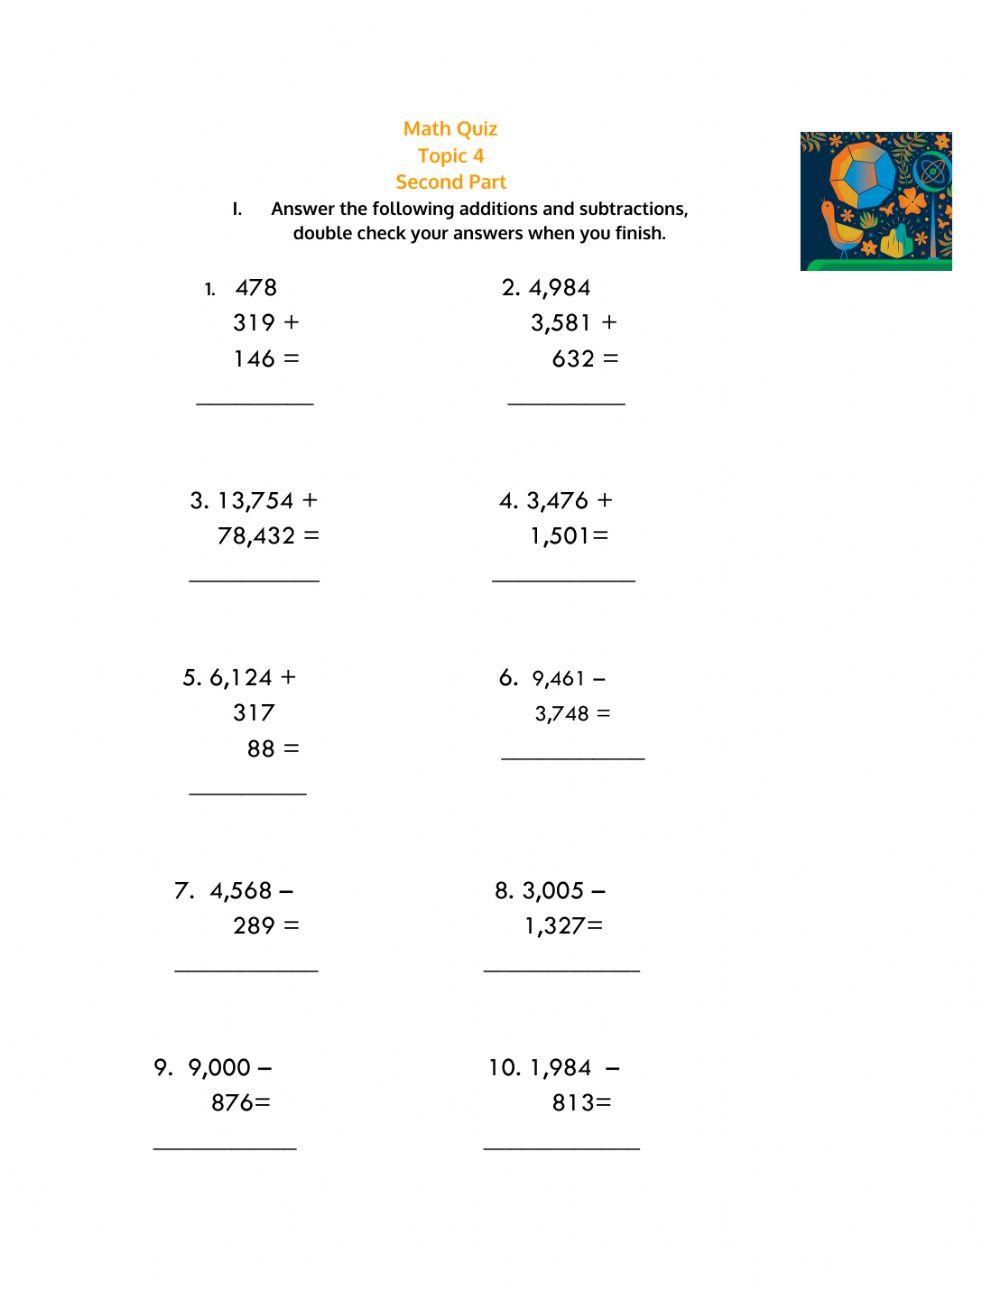 Math Quiz Topic 4